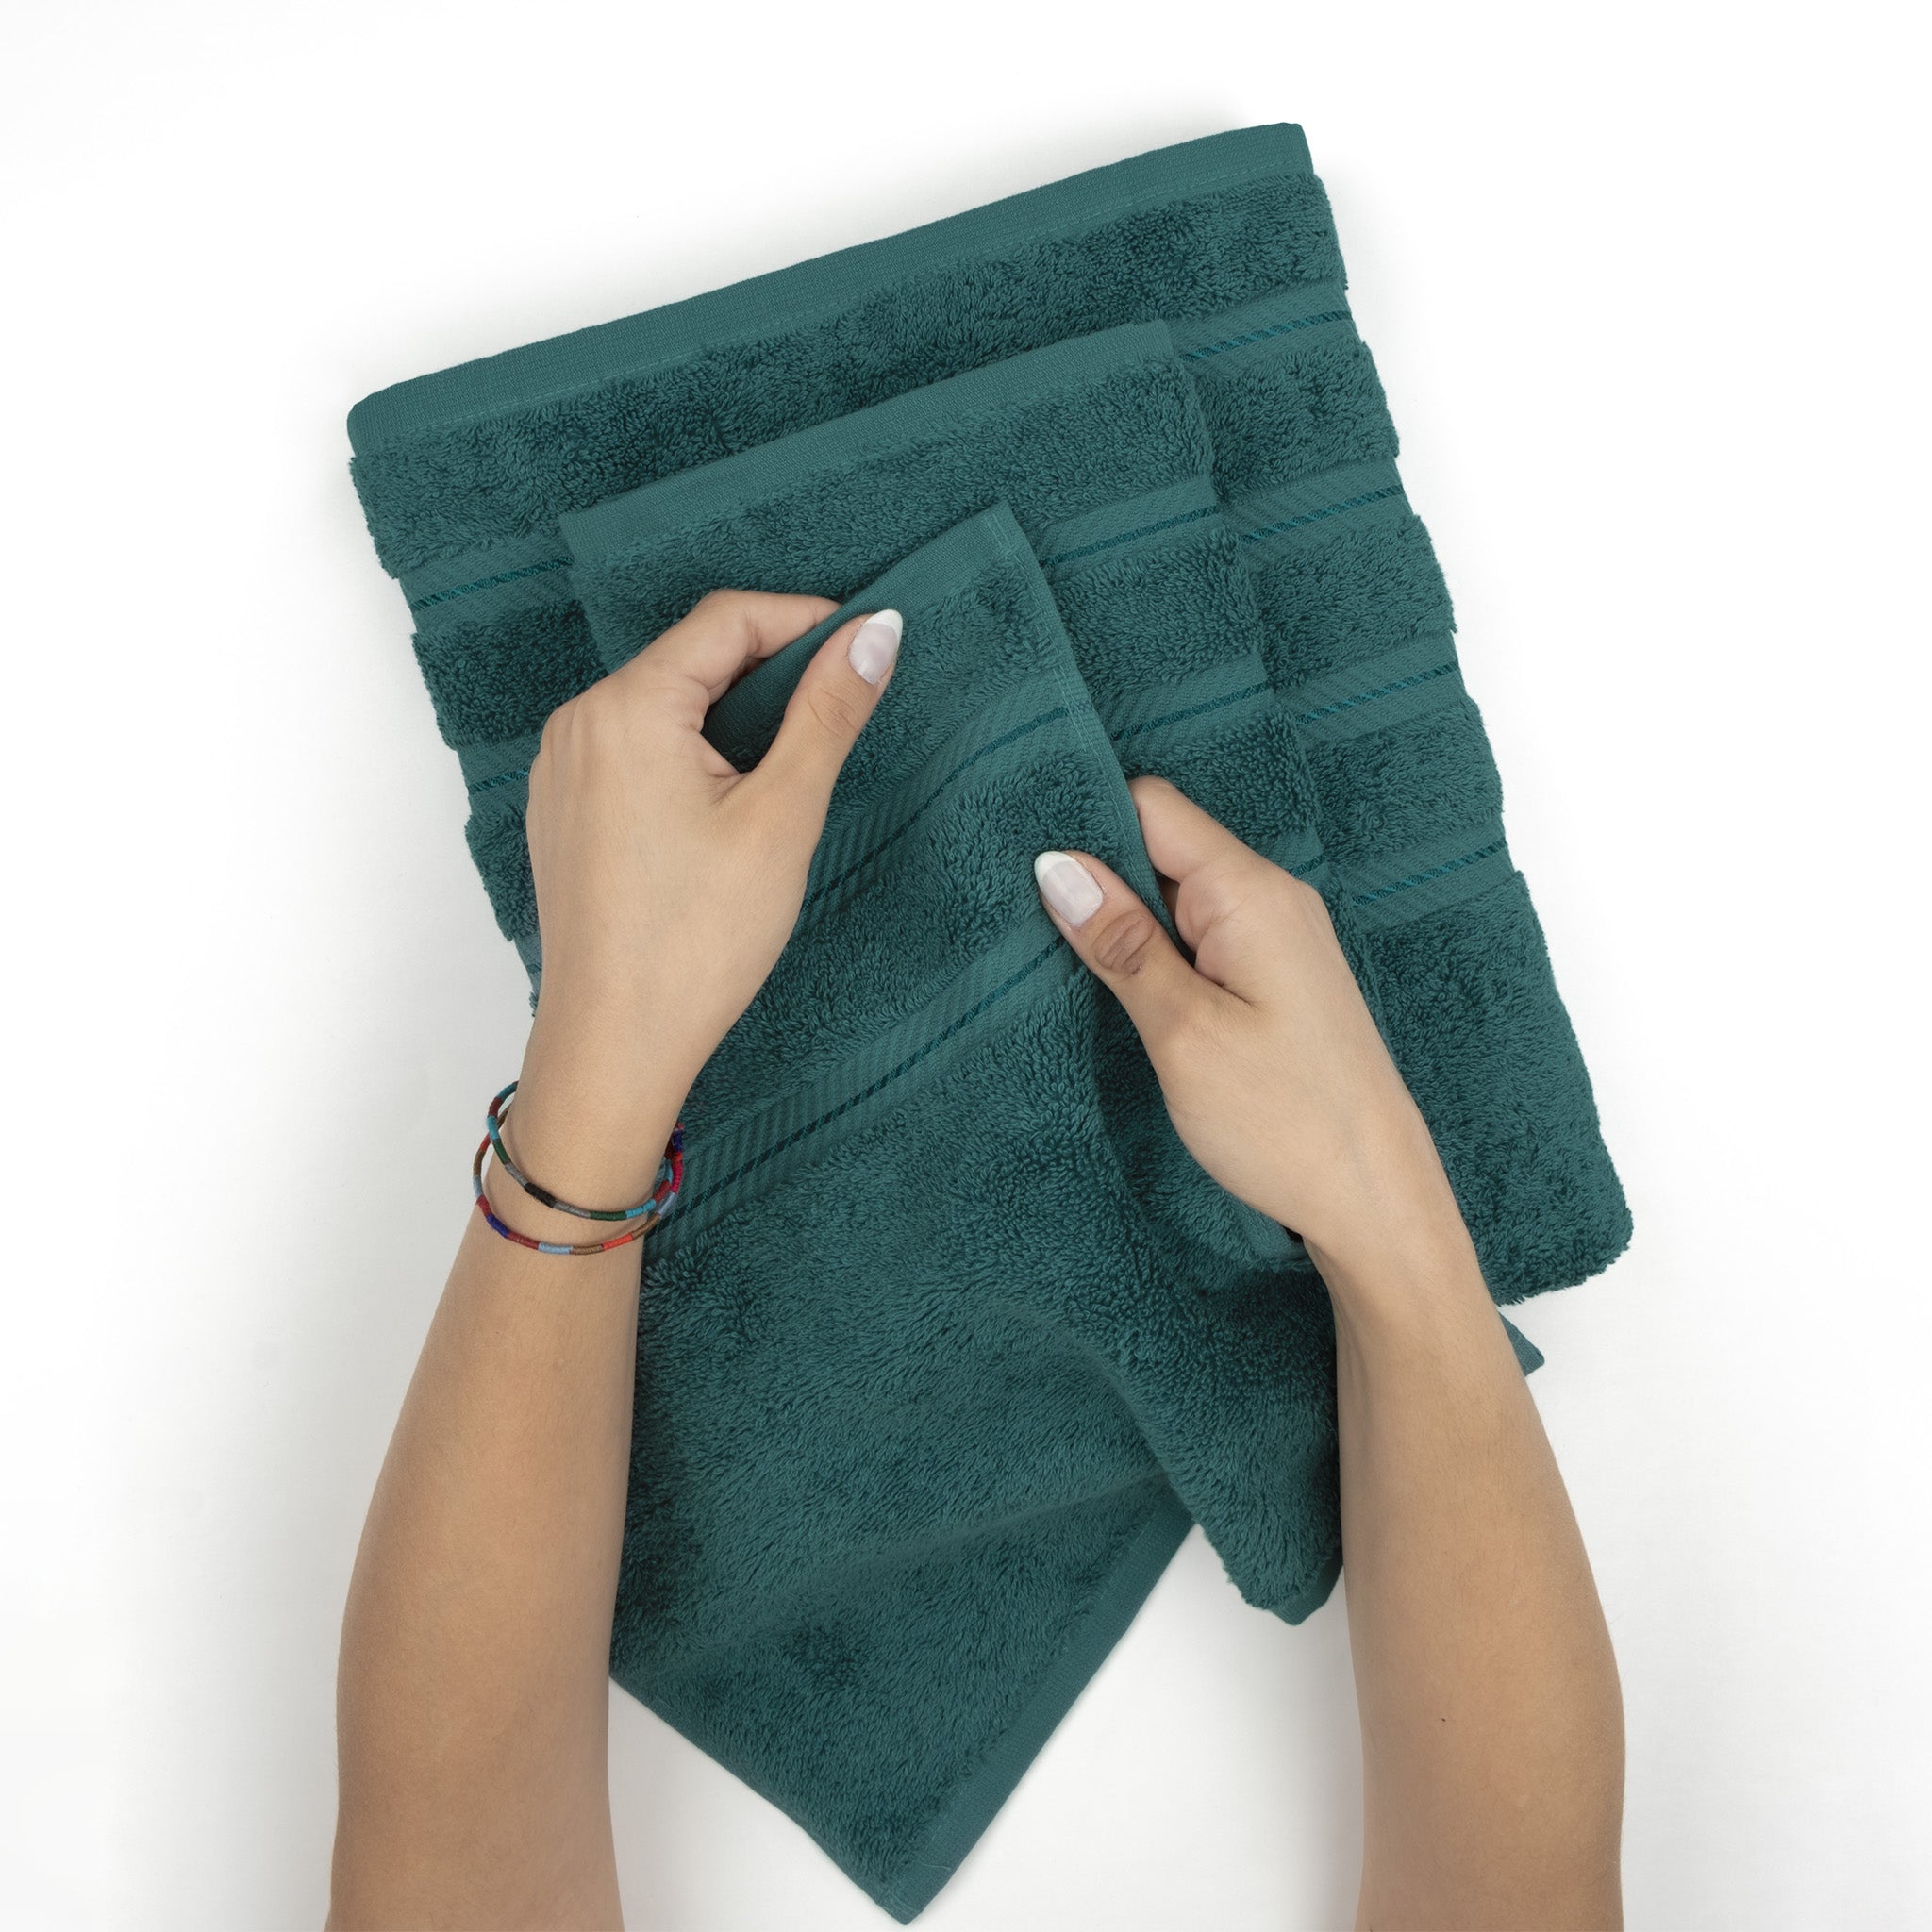 FLENULLA Bath Towels, 4-Piece Towels for Bathroom, Quick Dry Bathroom Towel Set 100% Turkish Cotton Bath Towel Set of Face Towel, Hand Towel, Body